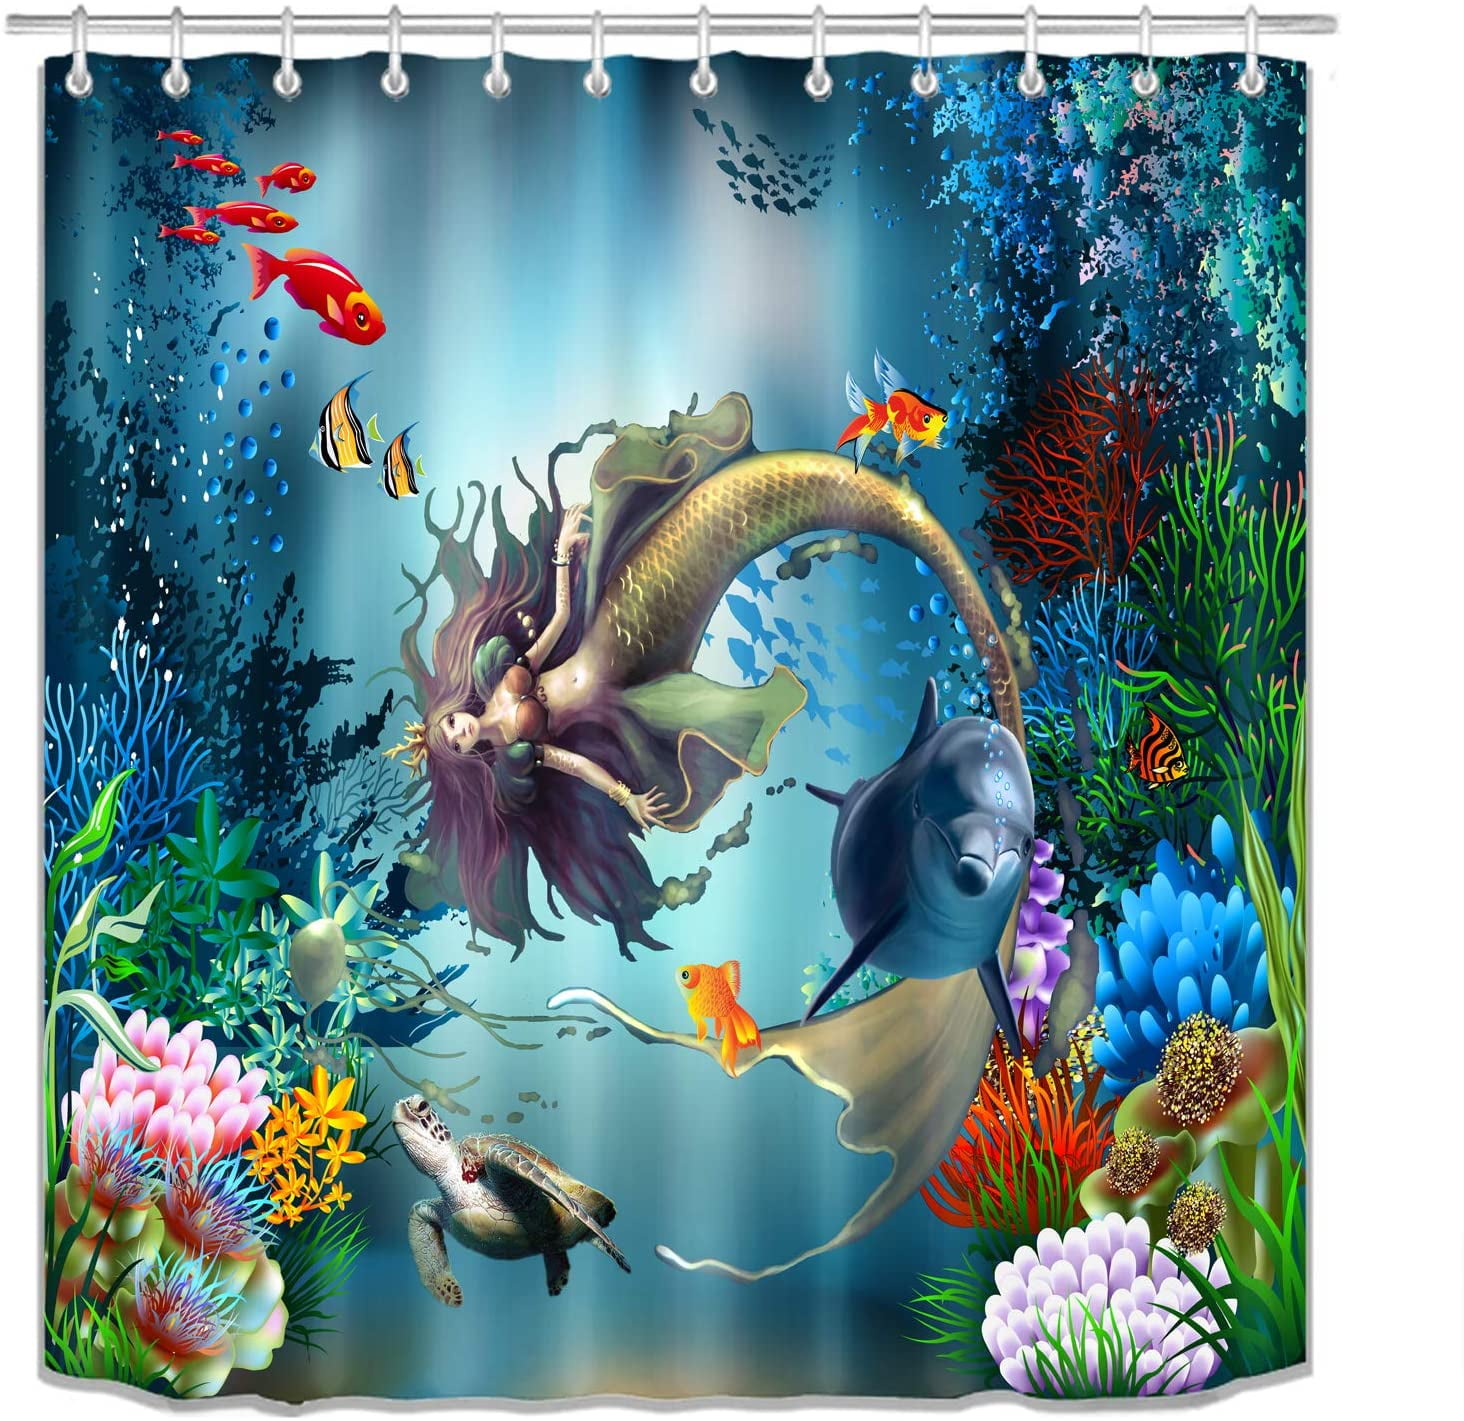 Underwater World Fish Dolphins Mermaid Polyester Fabric Shower Curtain Set 180cm 